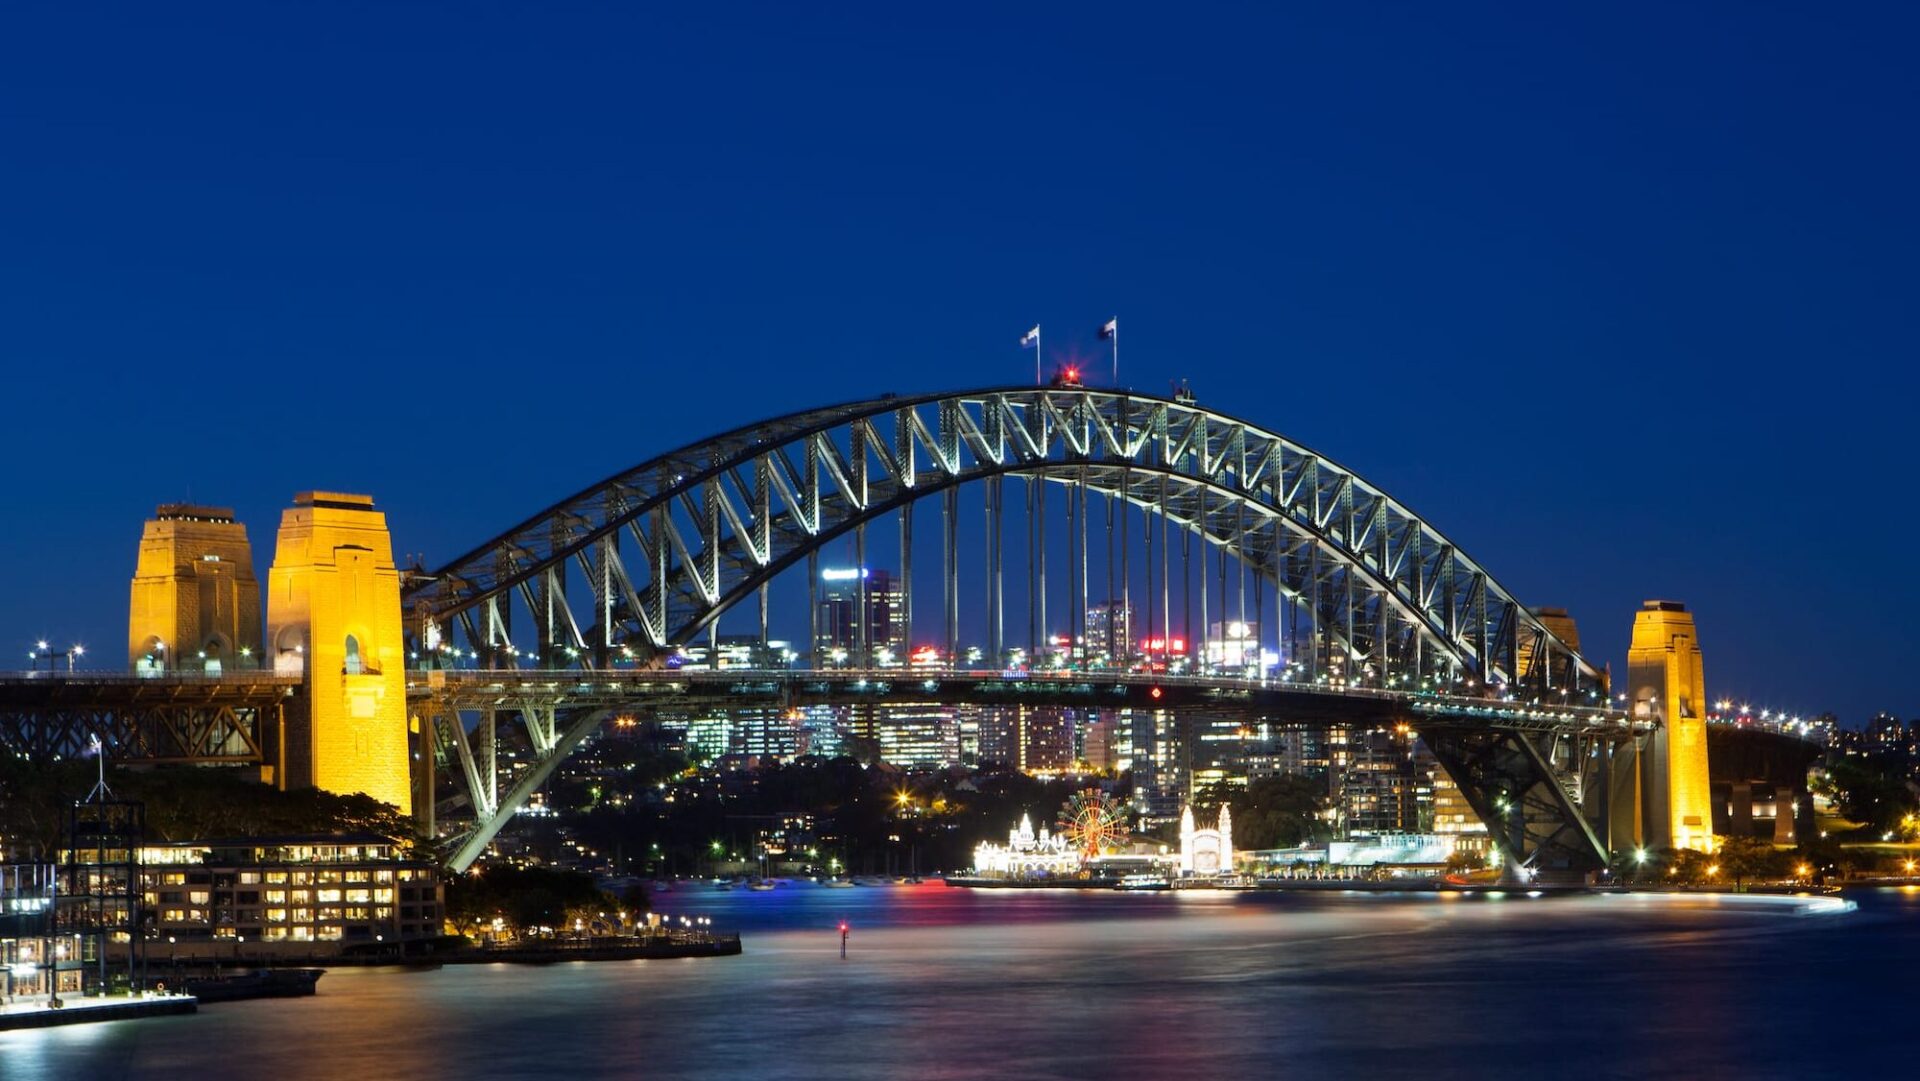 Sydney Harbour Bridge At Dusk 2021 08 26 17 04 26 Utc E1693943410649 